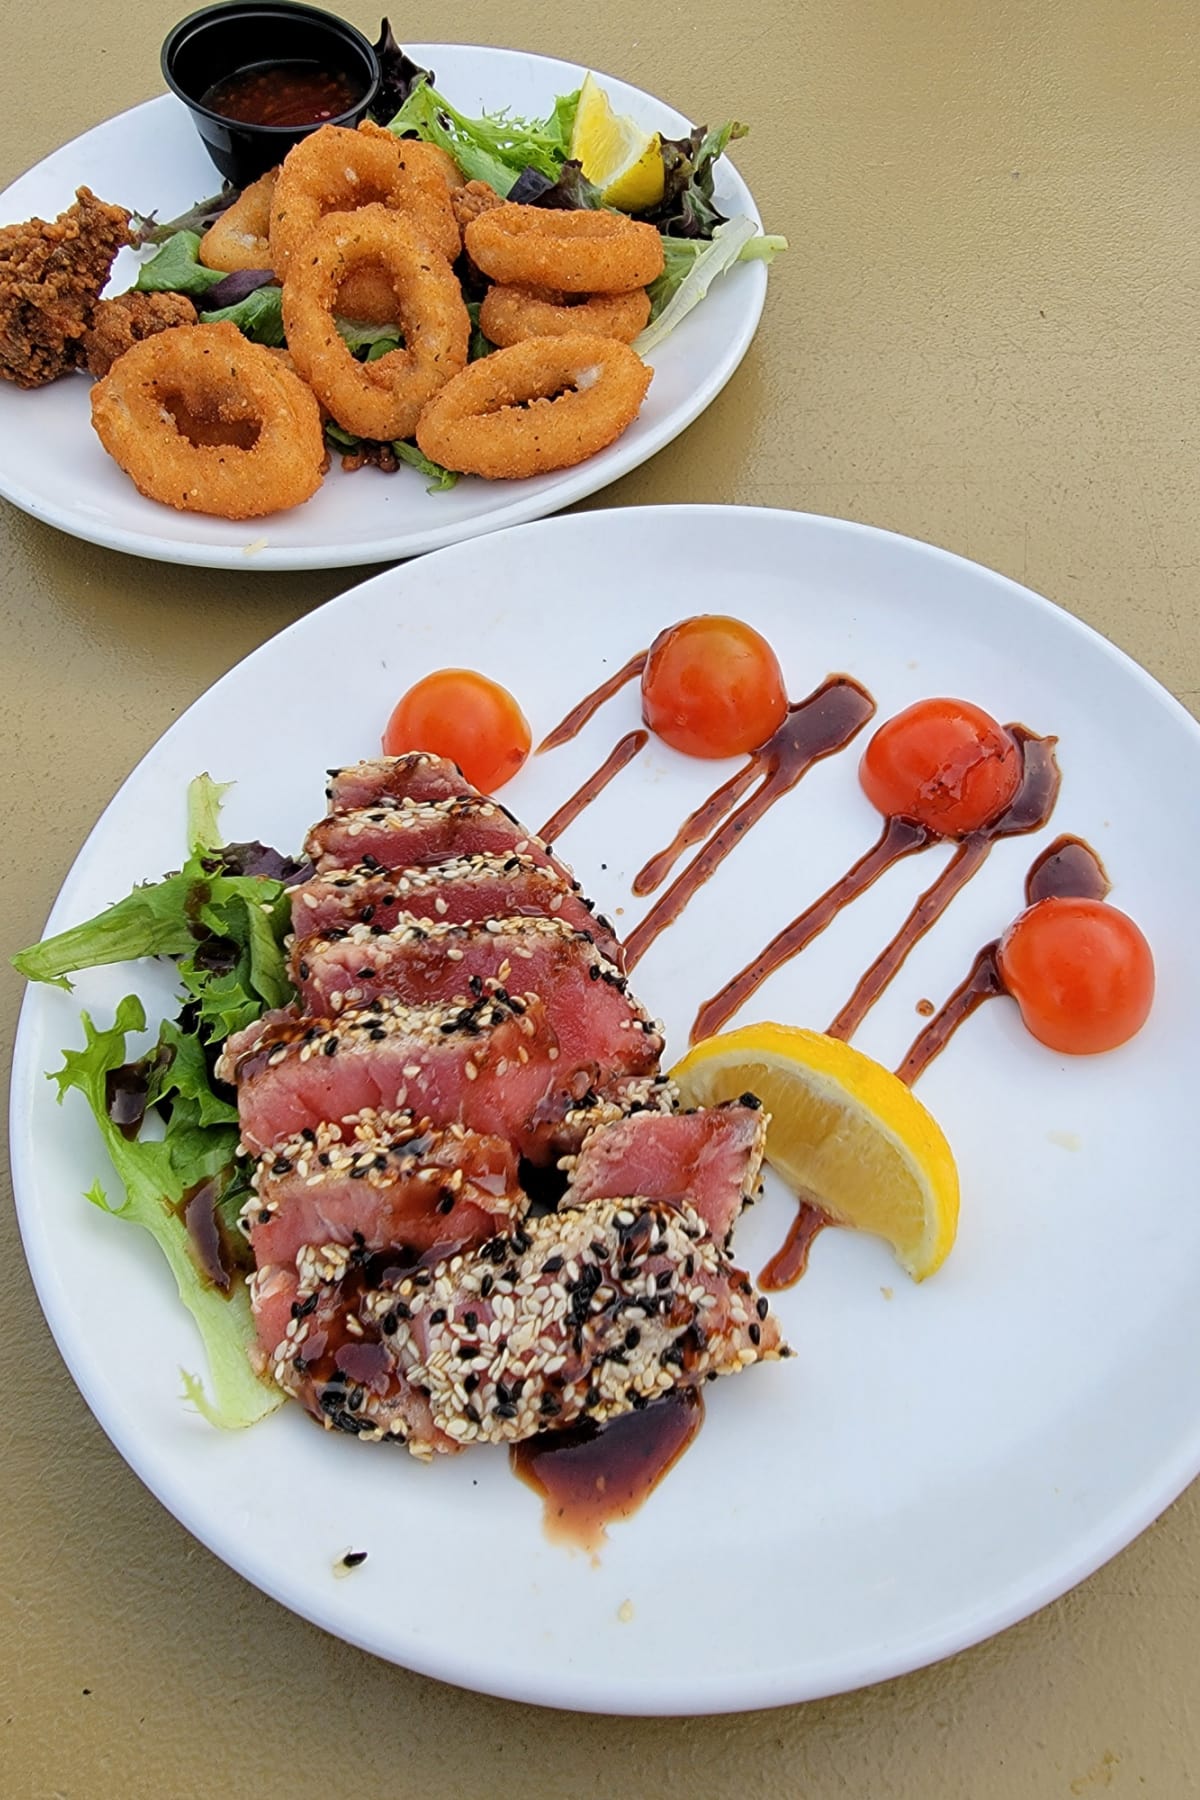 Tuna and calamari appetizers